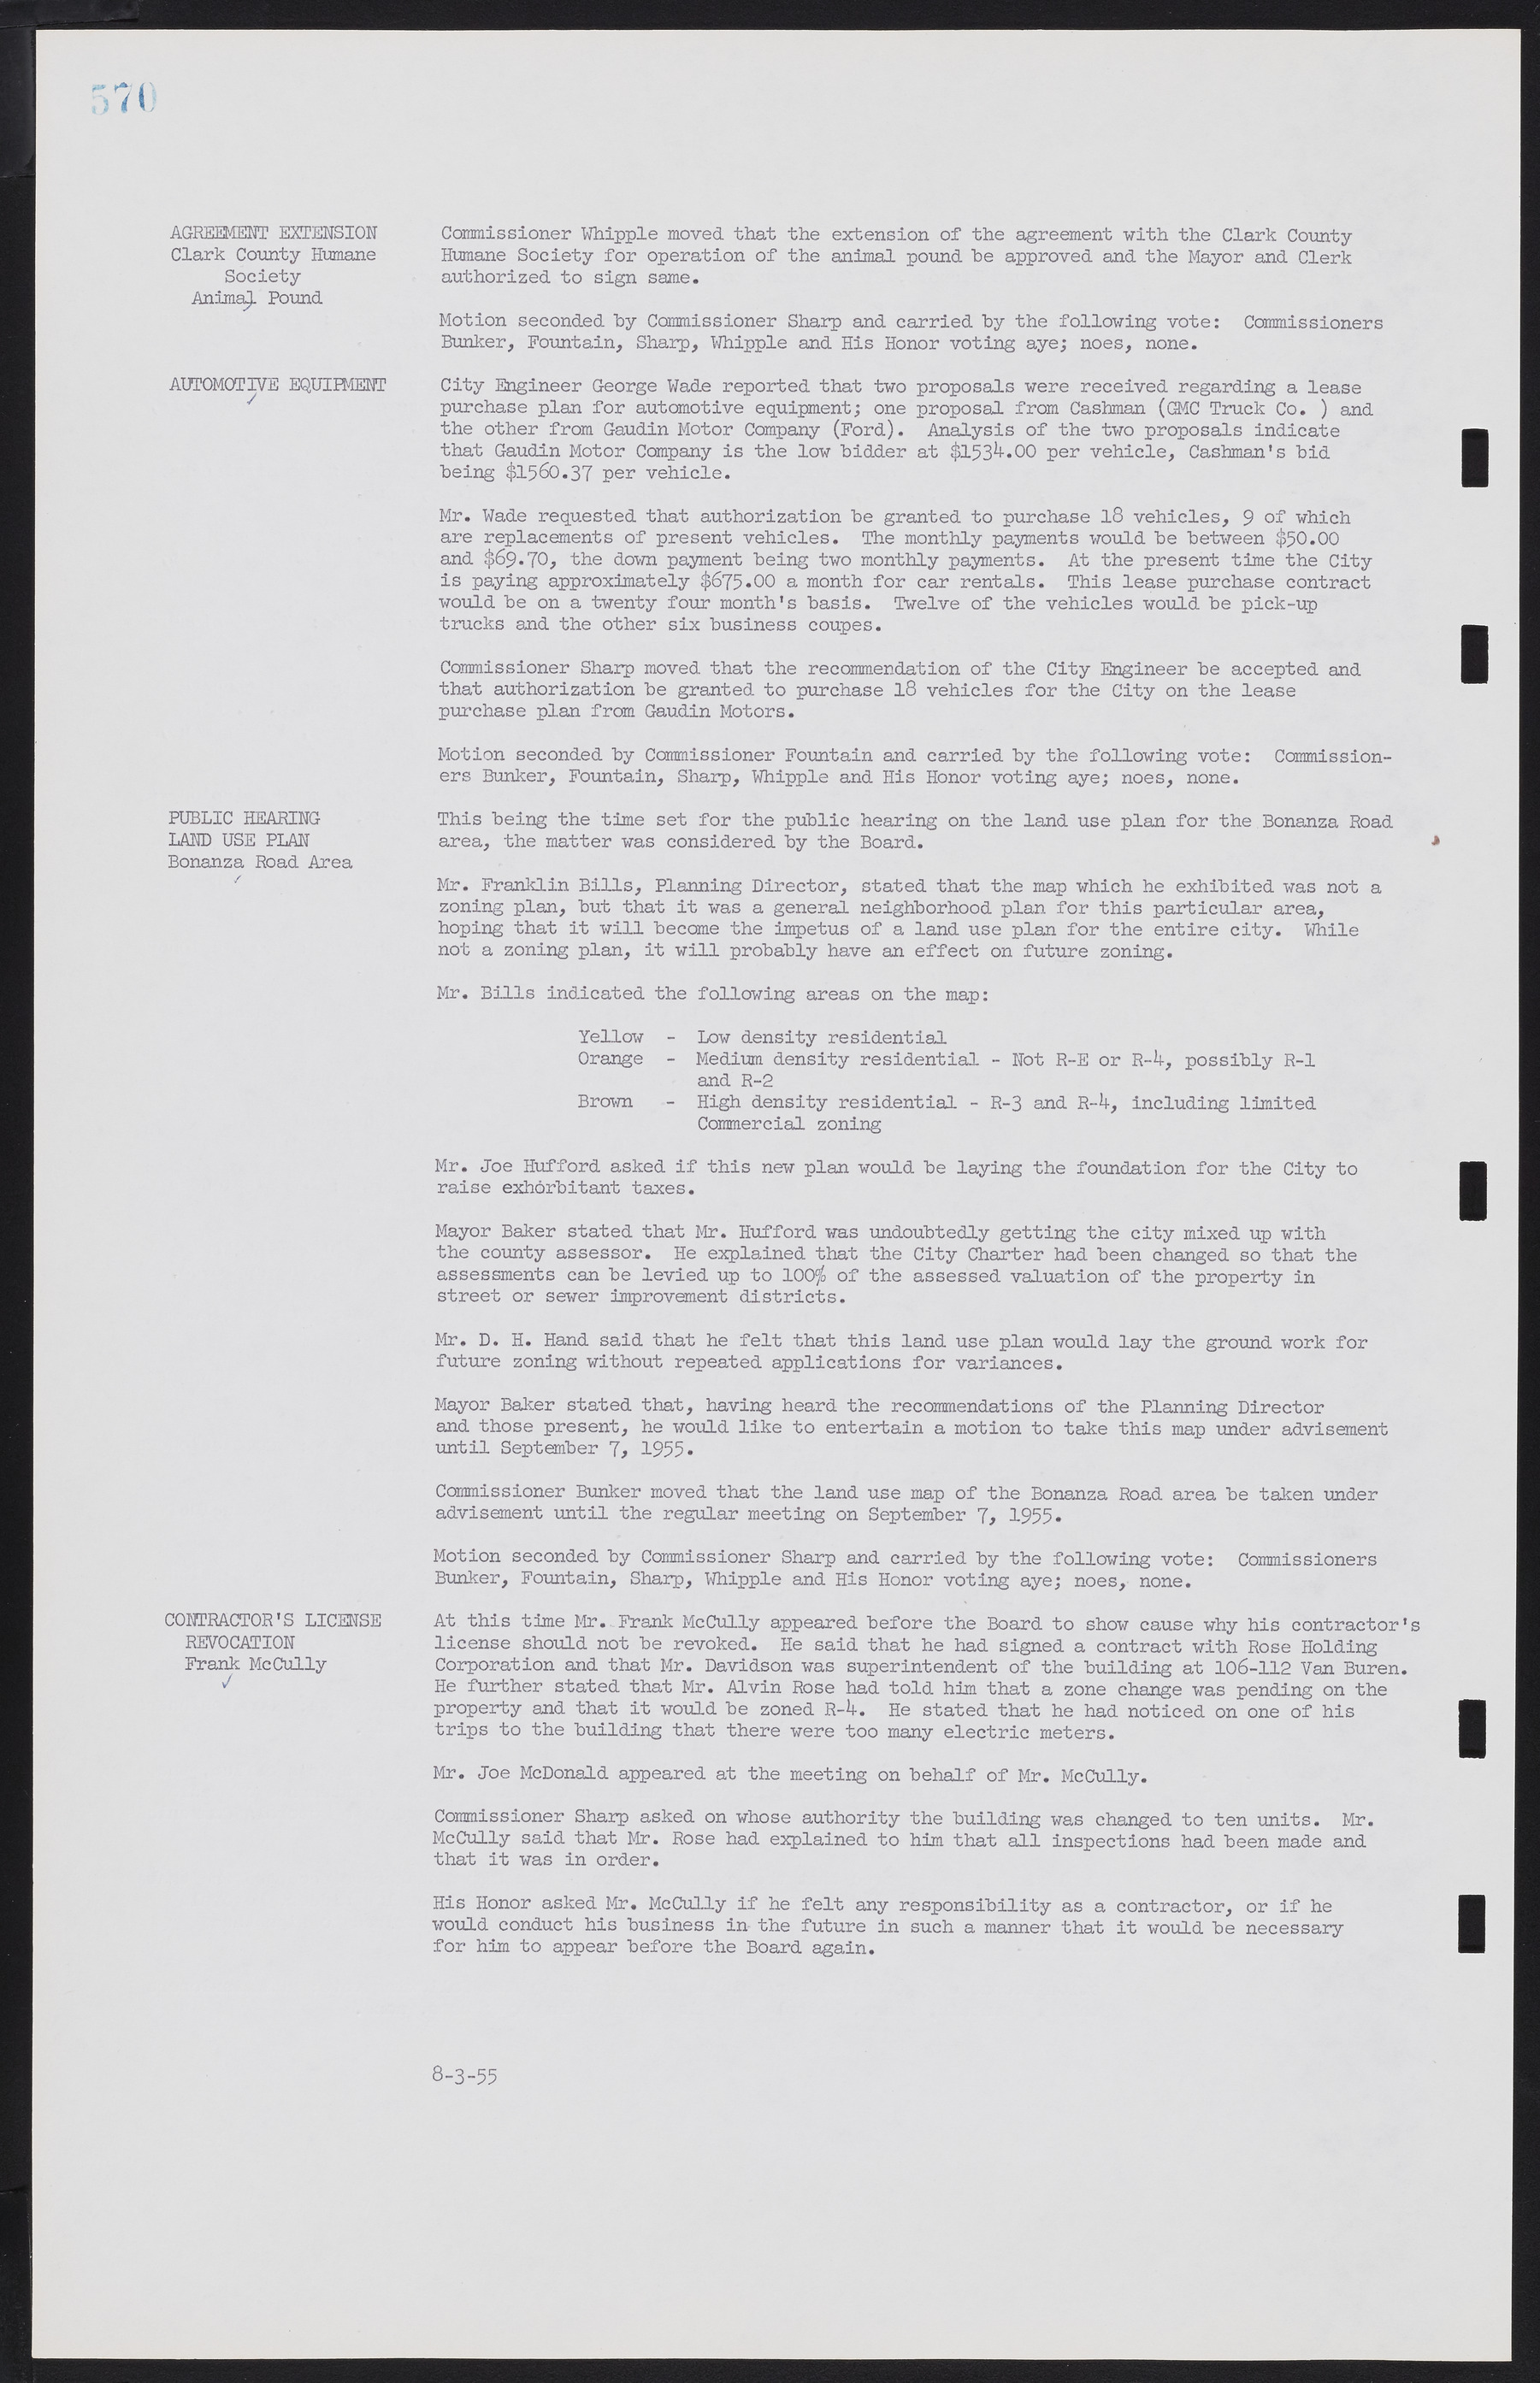 Las Vegas City Commission Minutes, February 17, 1954 to September 21, 1955, lvc000009-576